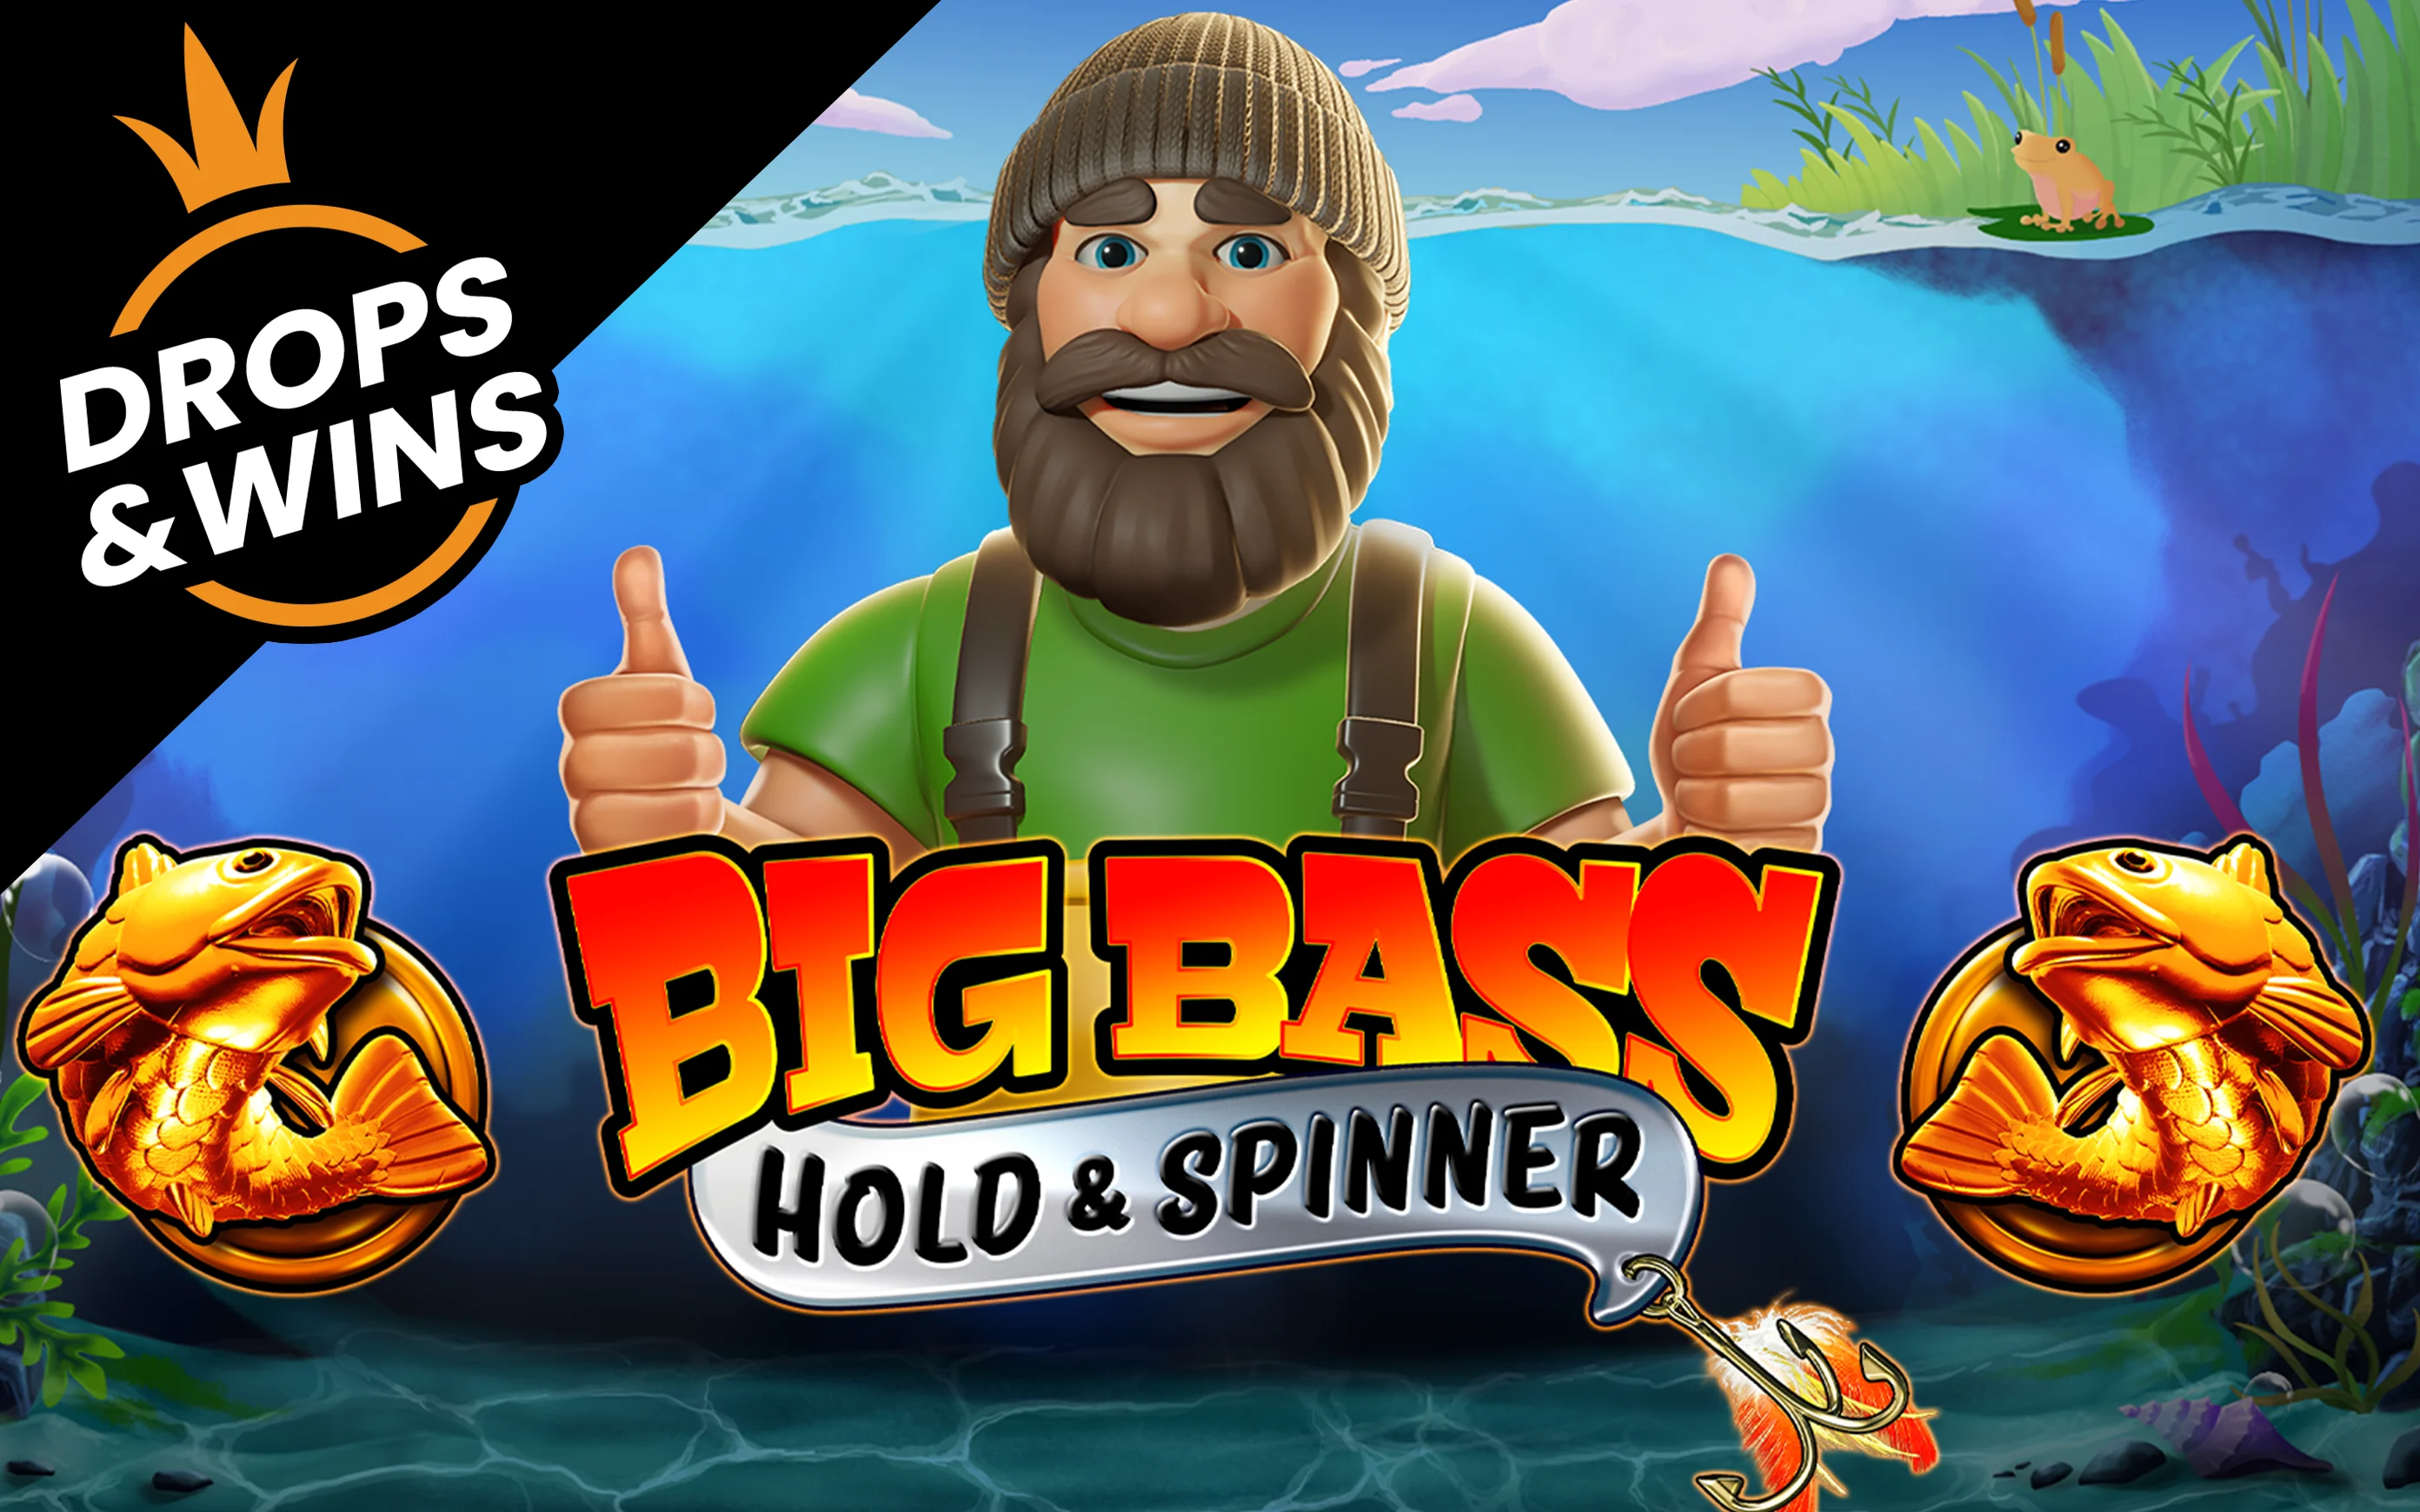 Play Big Bass - Hold & Spinner™ on Starcasino.be online casino